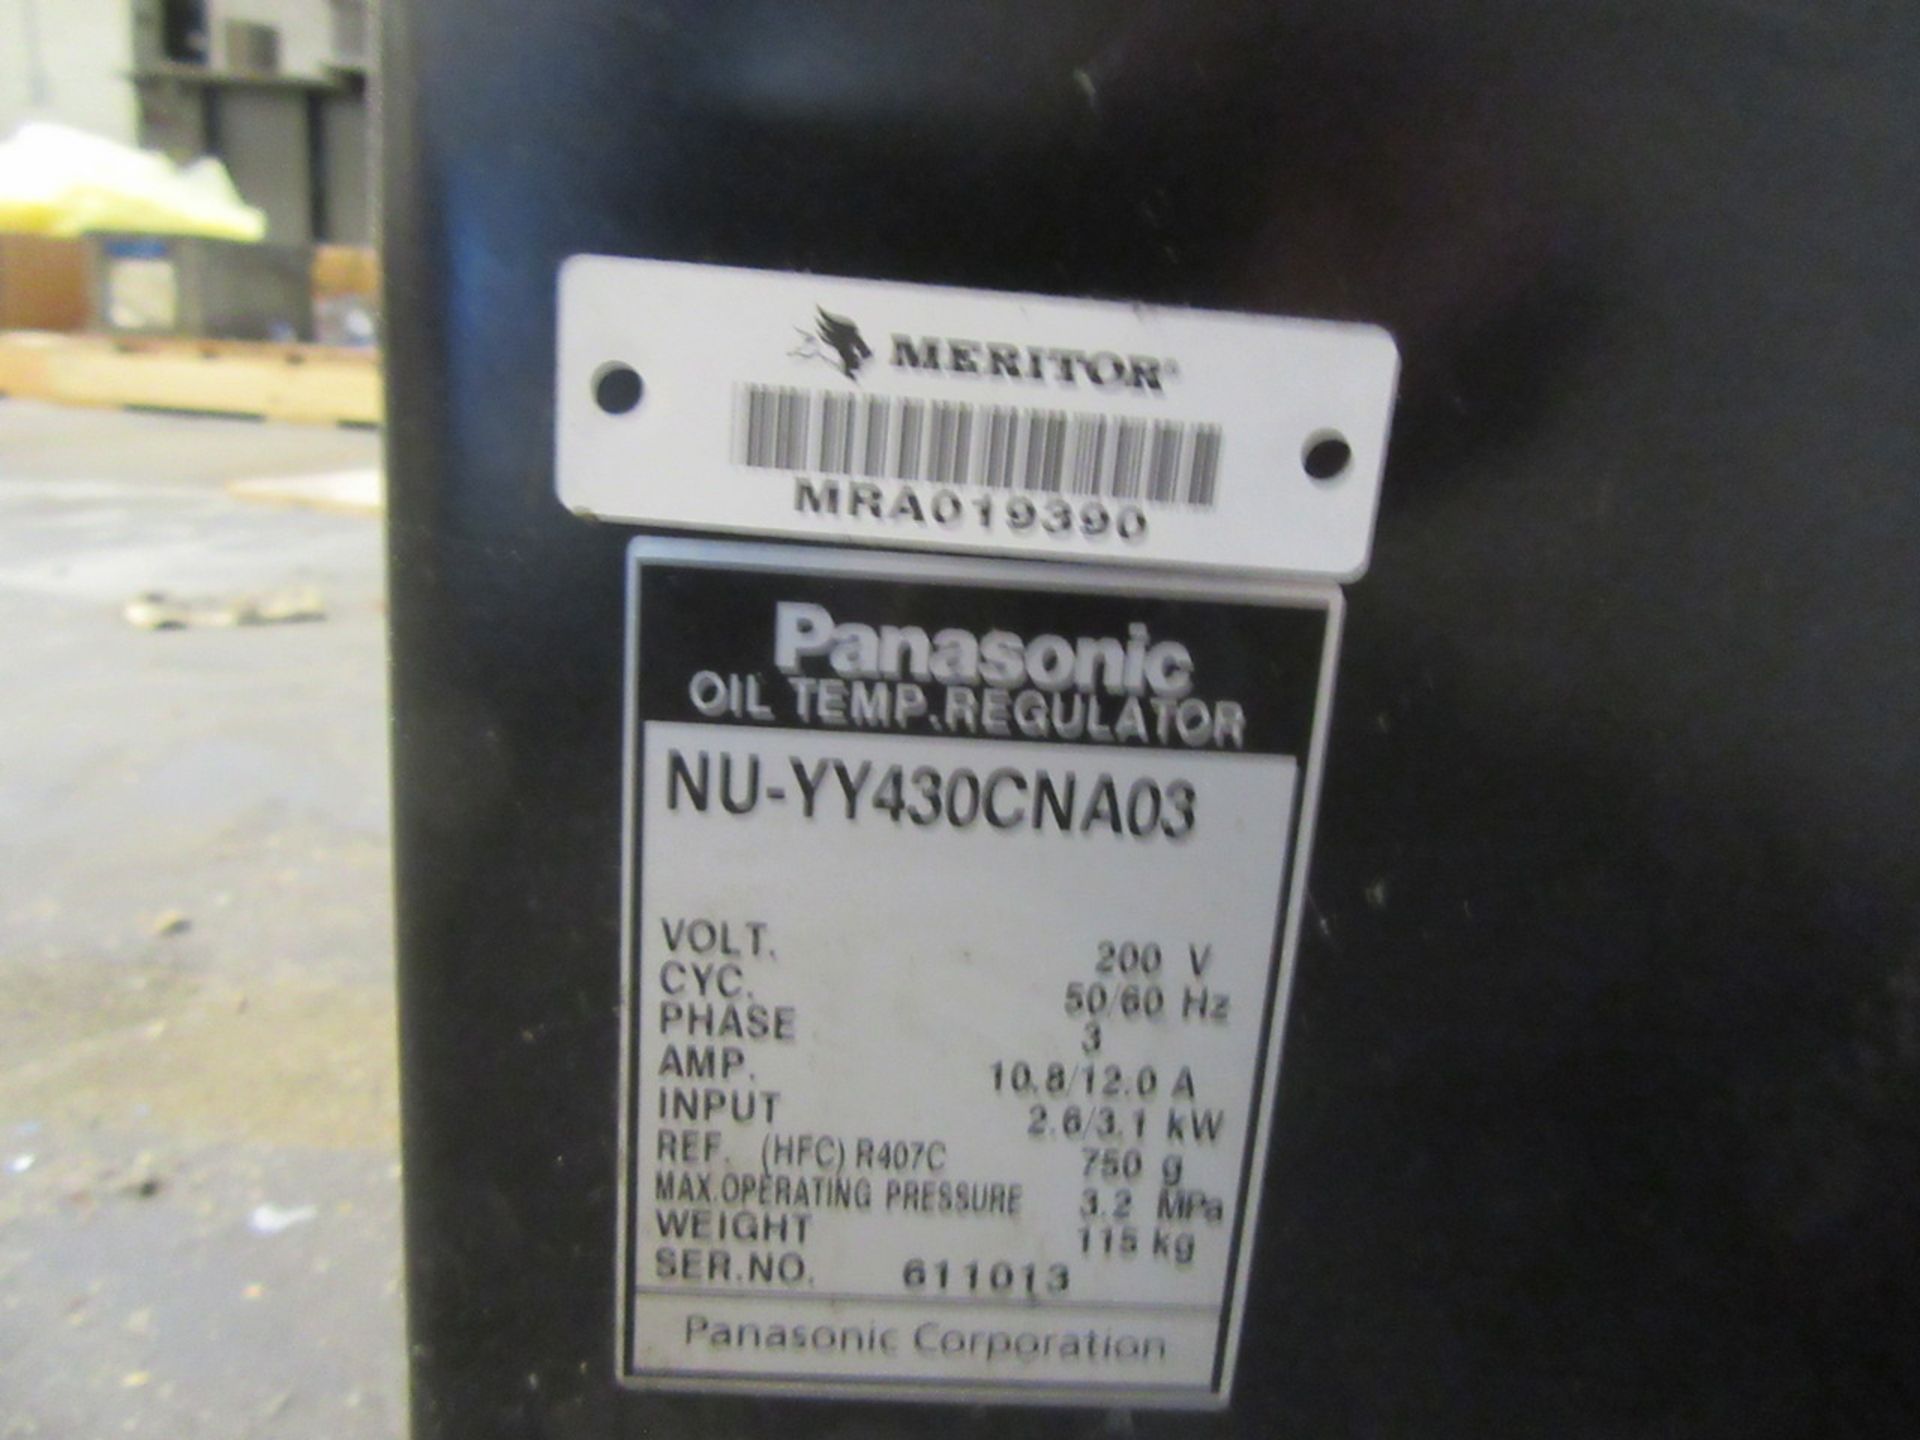 Panasonic NU-YY430CNA03 Oil Temperature Regulator - Image 3 of 3